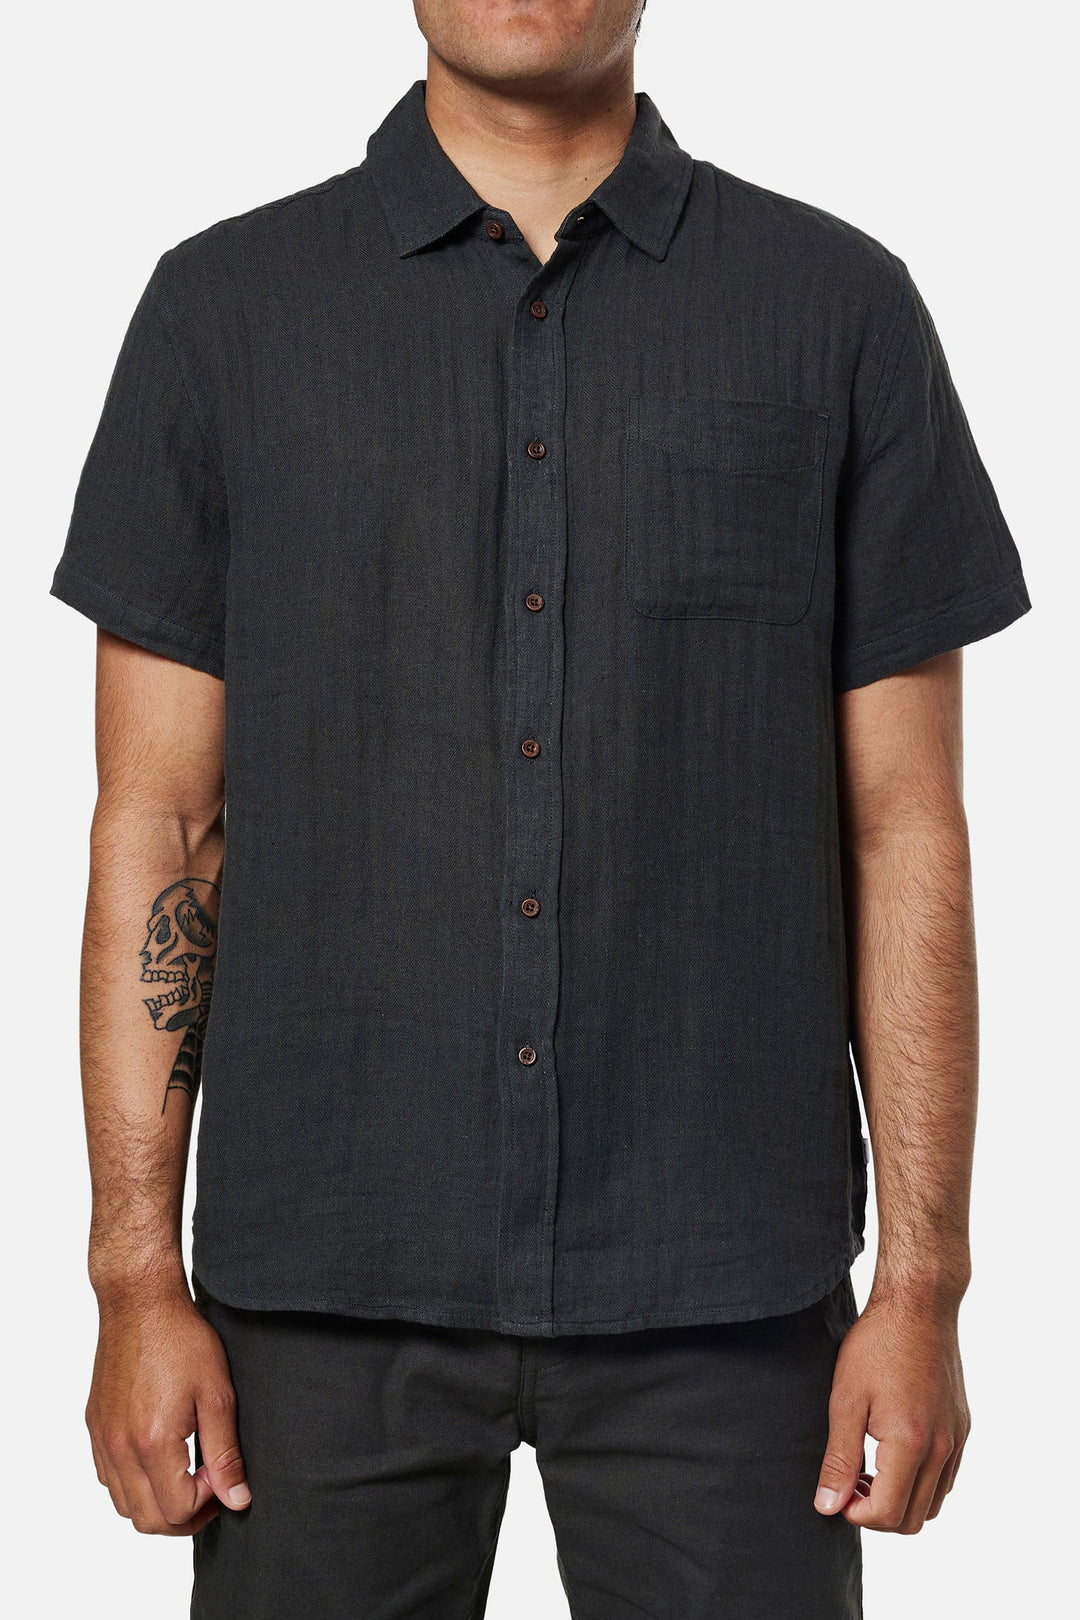 Katin Alan Solid Shirt - BLACK WASH - Sun Diego Boardshop